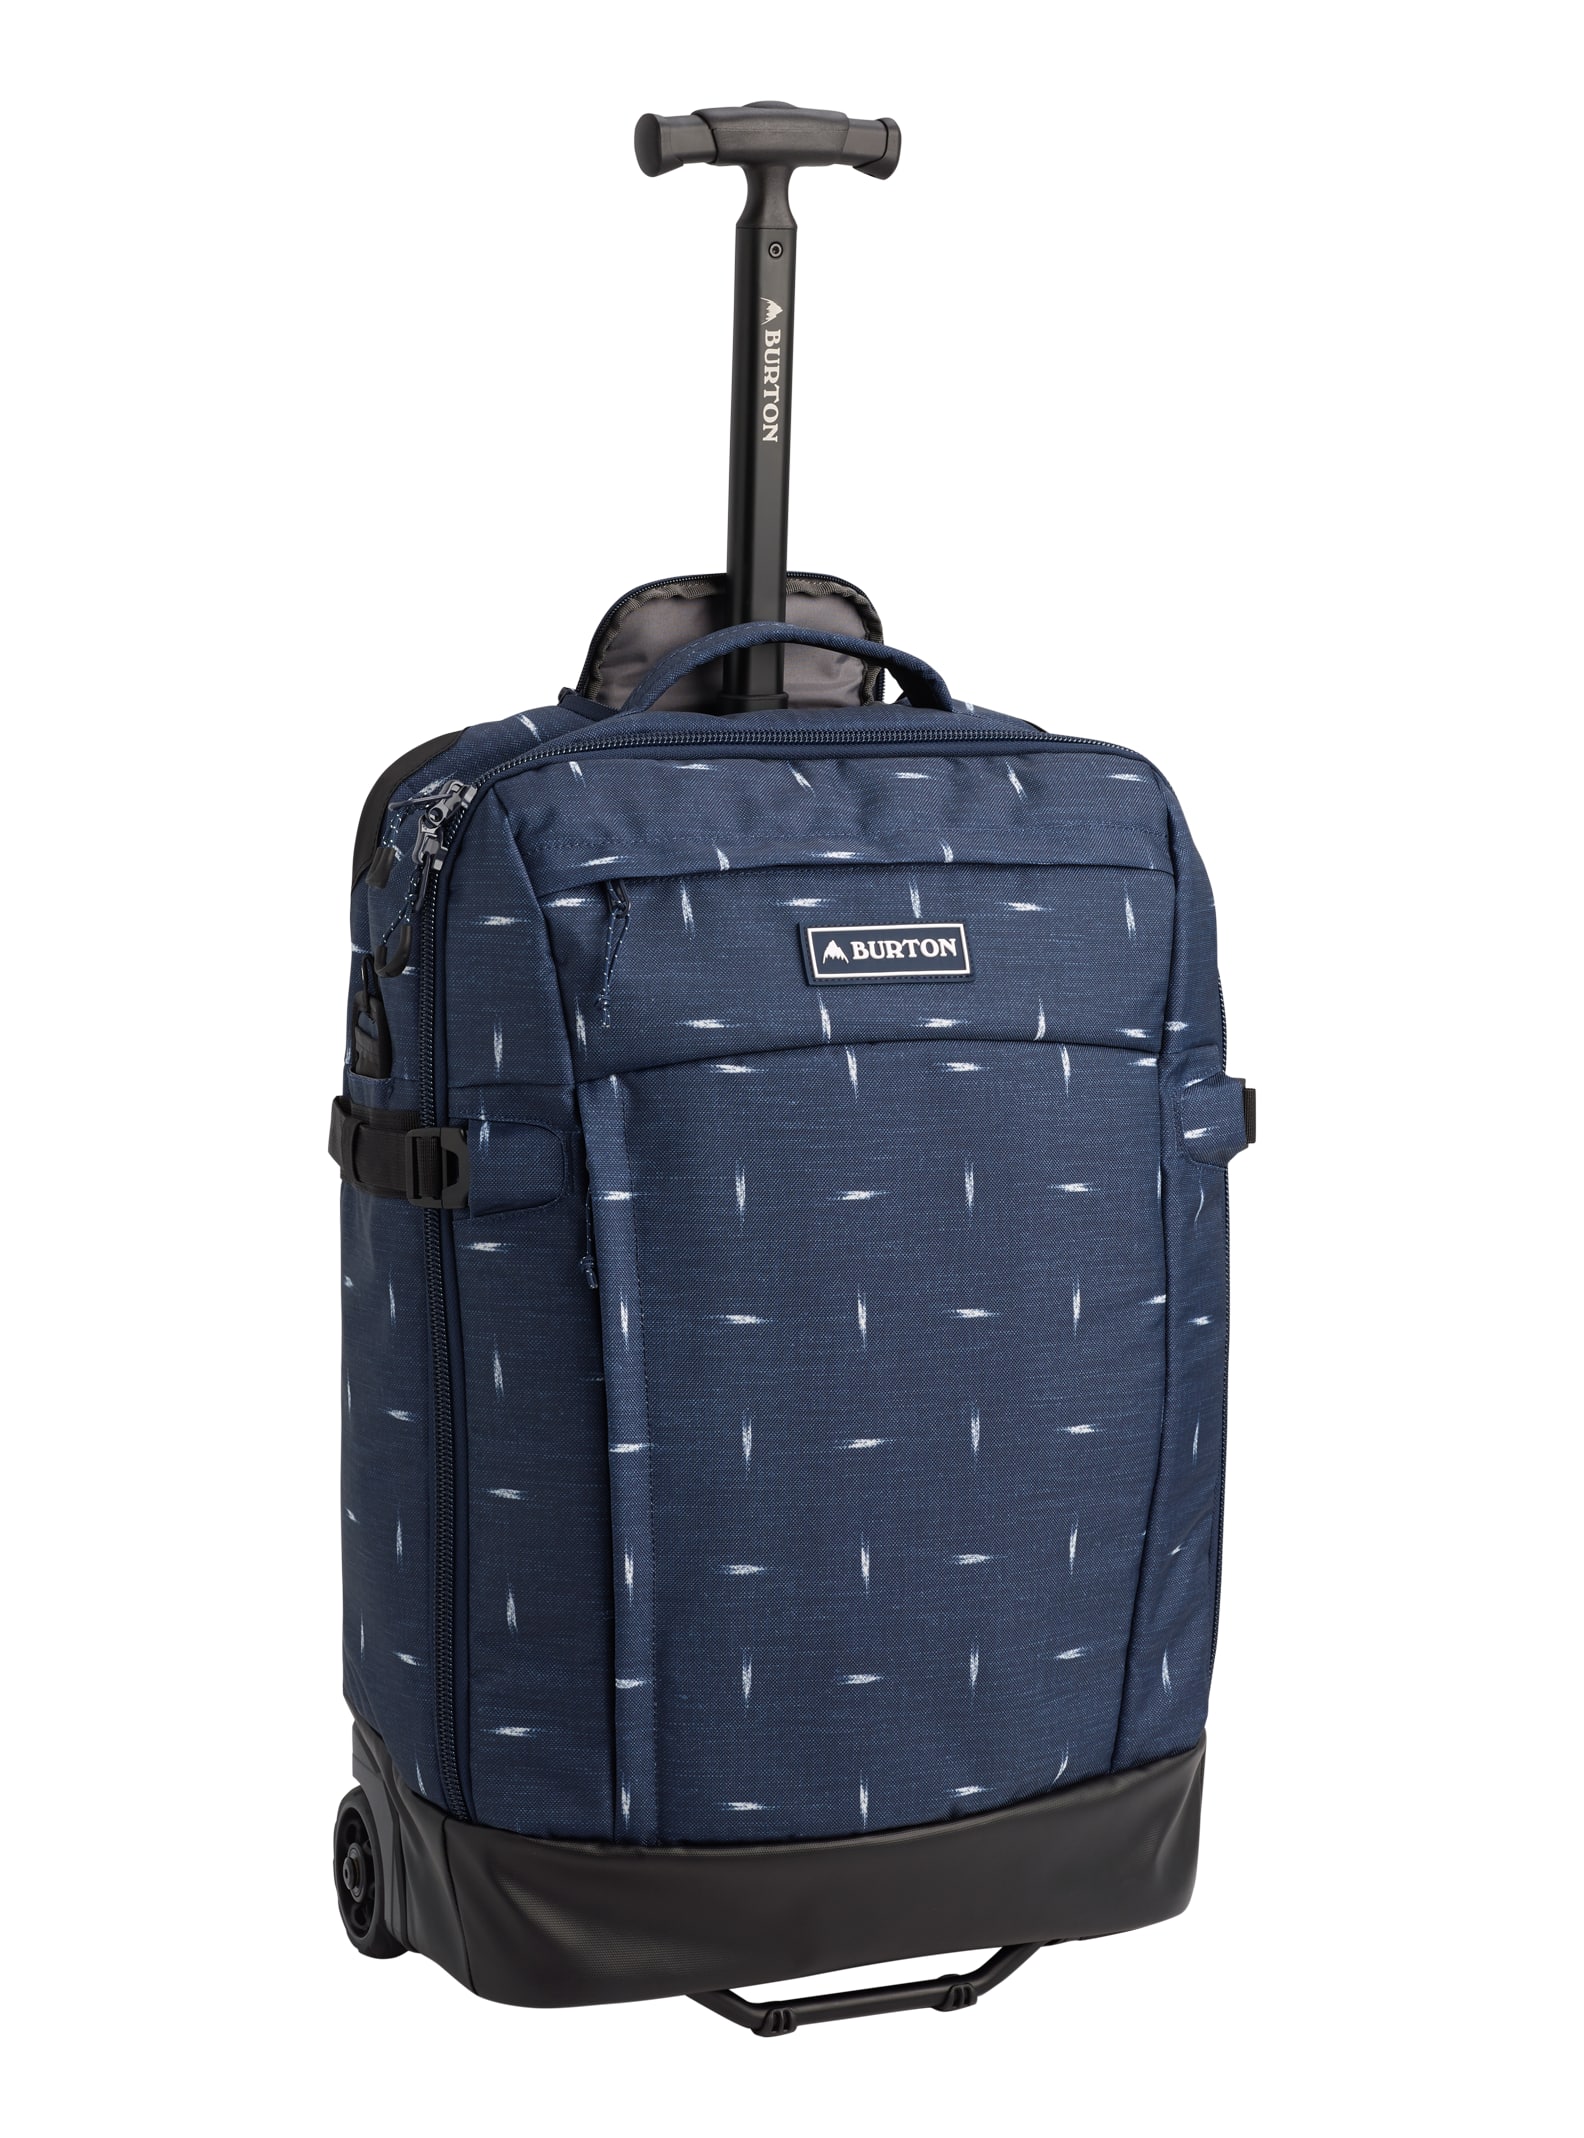 Burton Multipath 40L Carry-On Travel Bag | Burton.com Spring 2020 JP